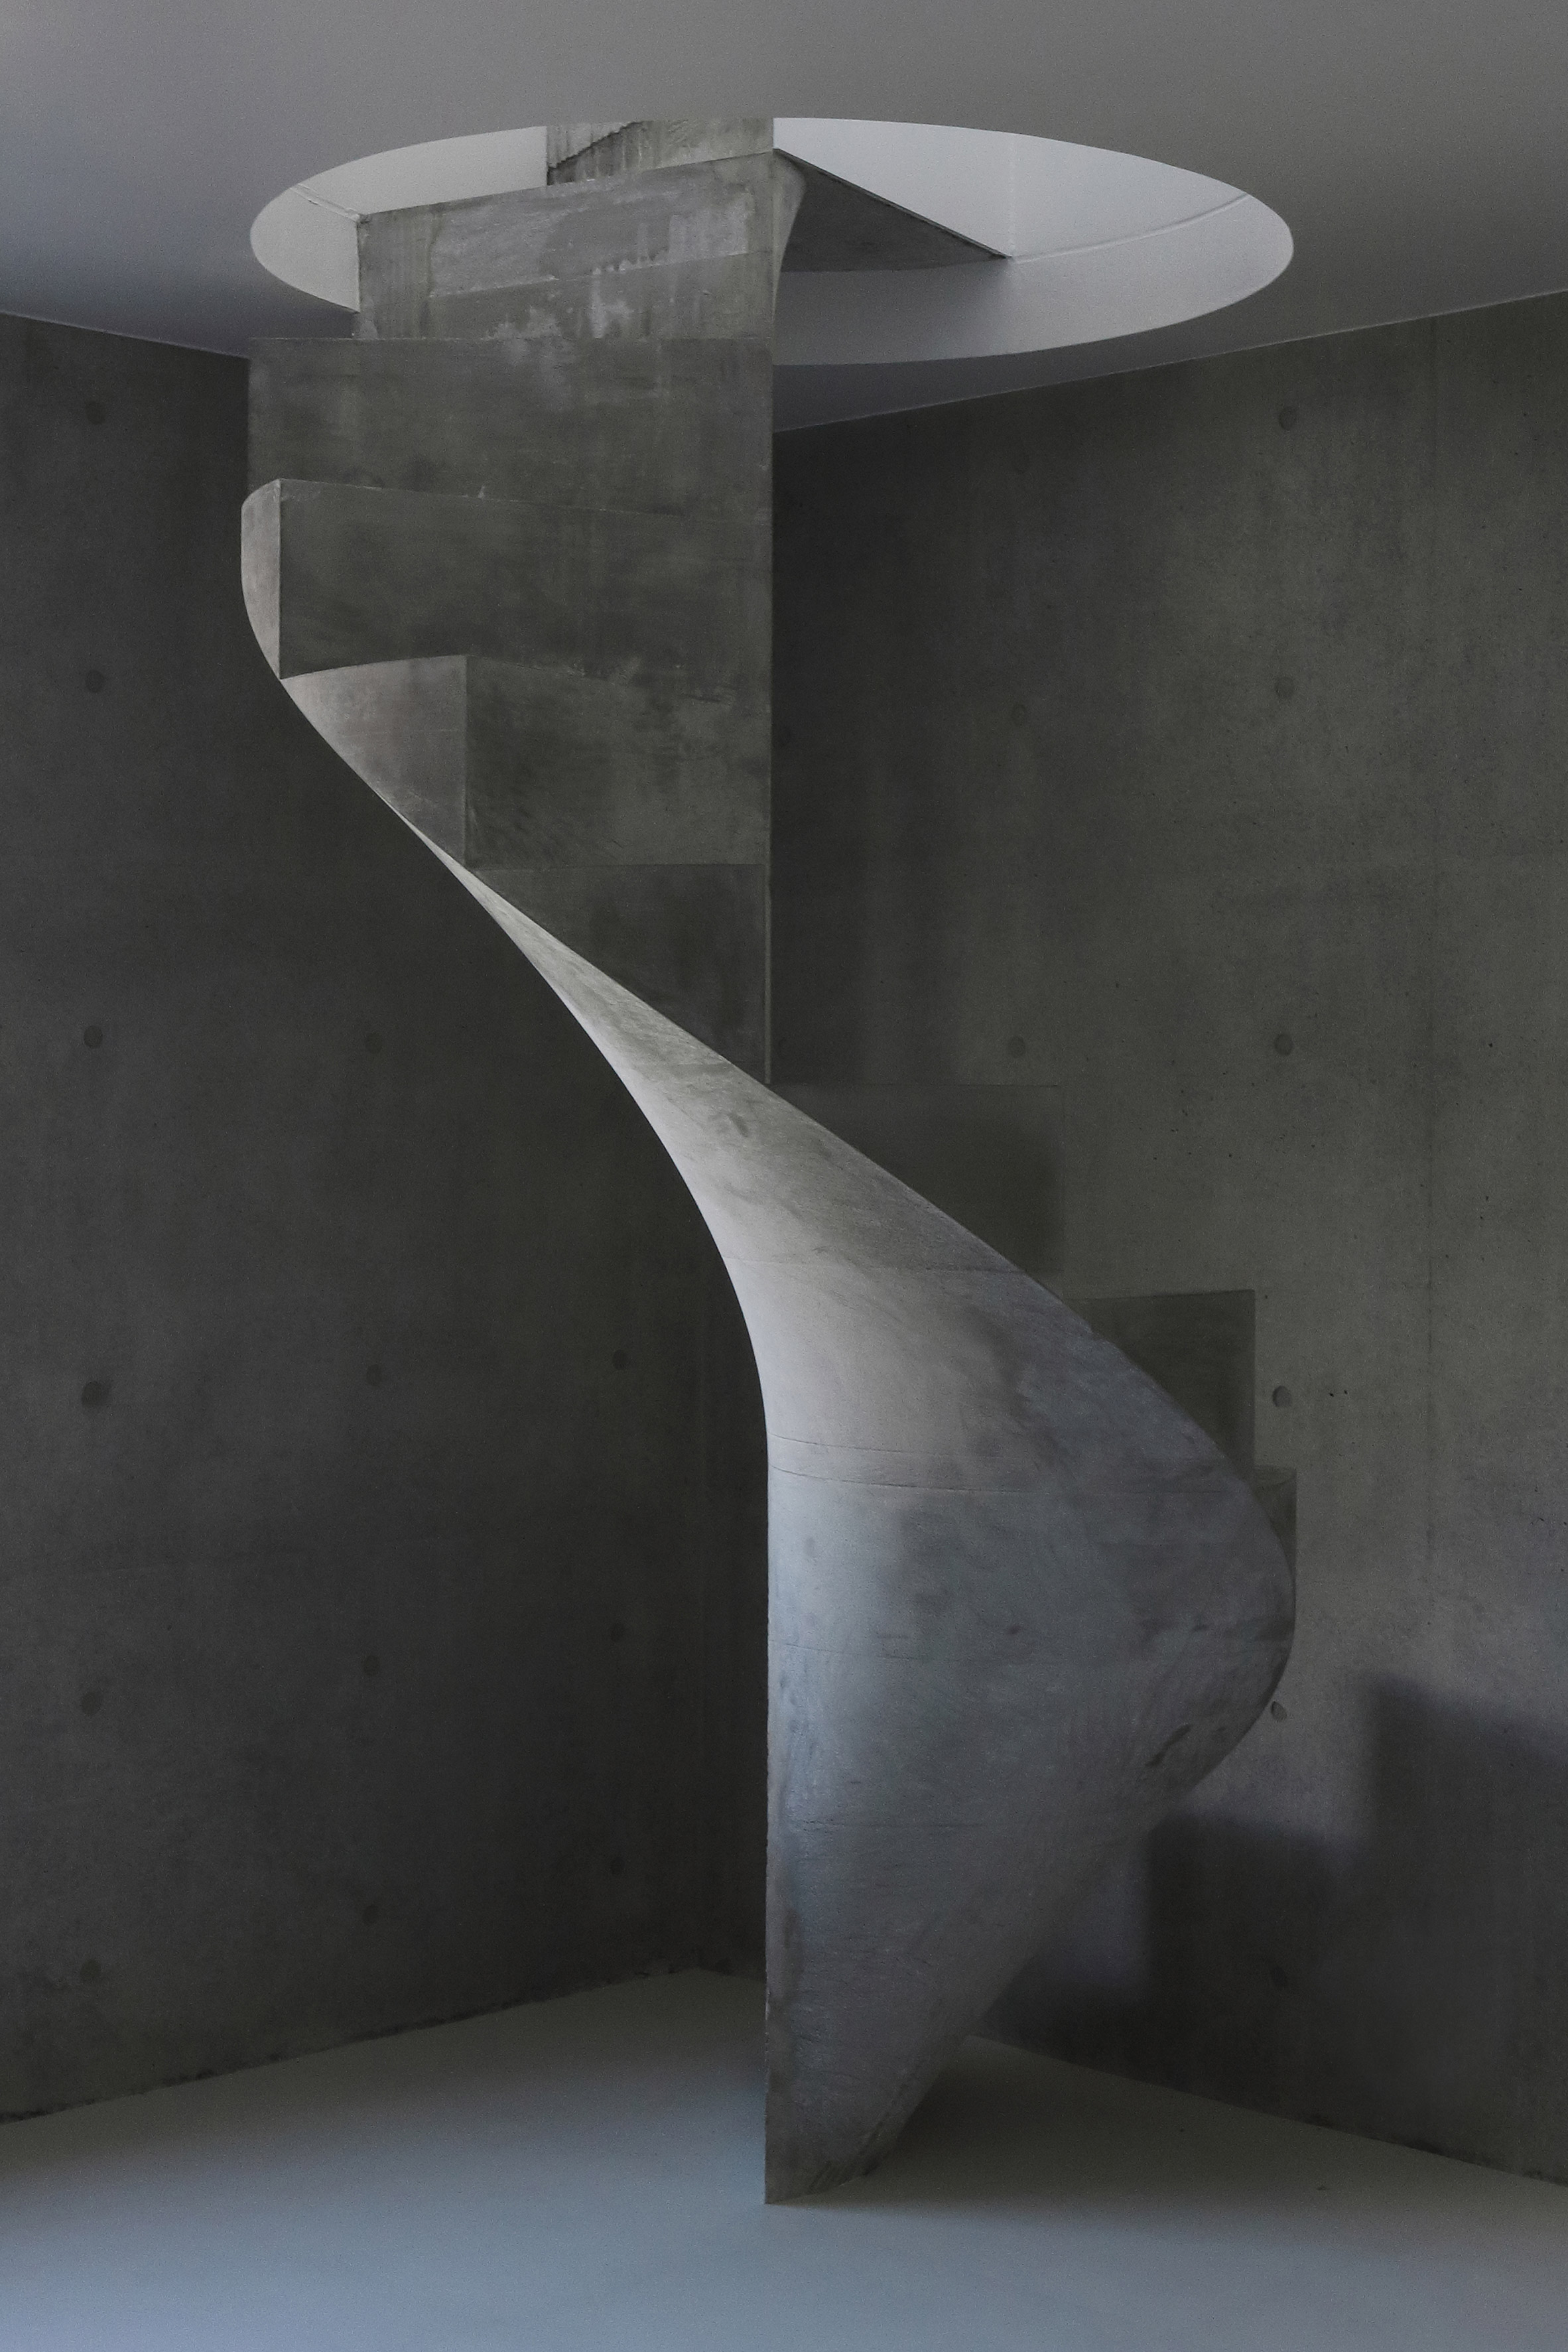 house-akitsu-kazunori-fujimoto-architect-associates-japan-architecture-concrete_dezeen_2364_col_9